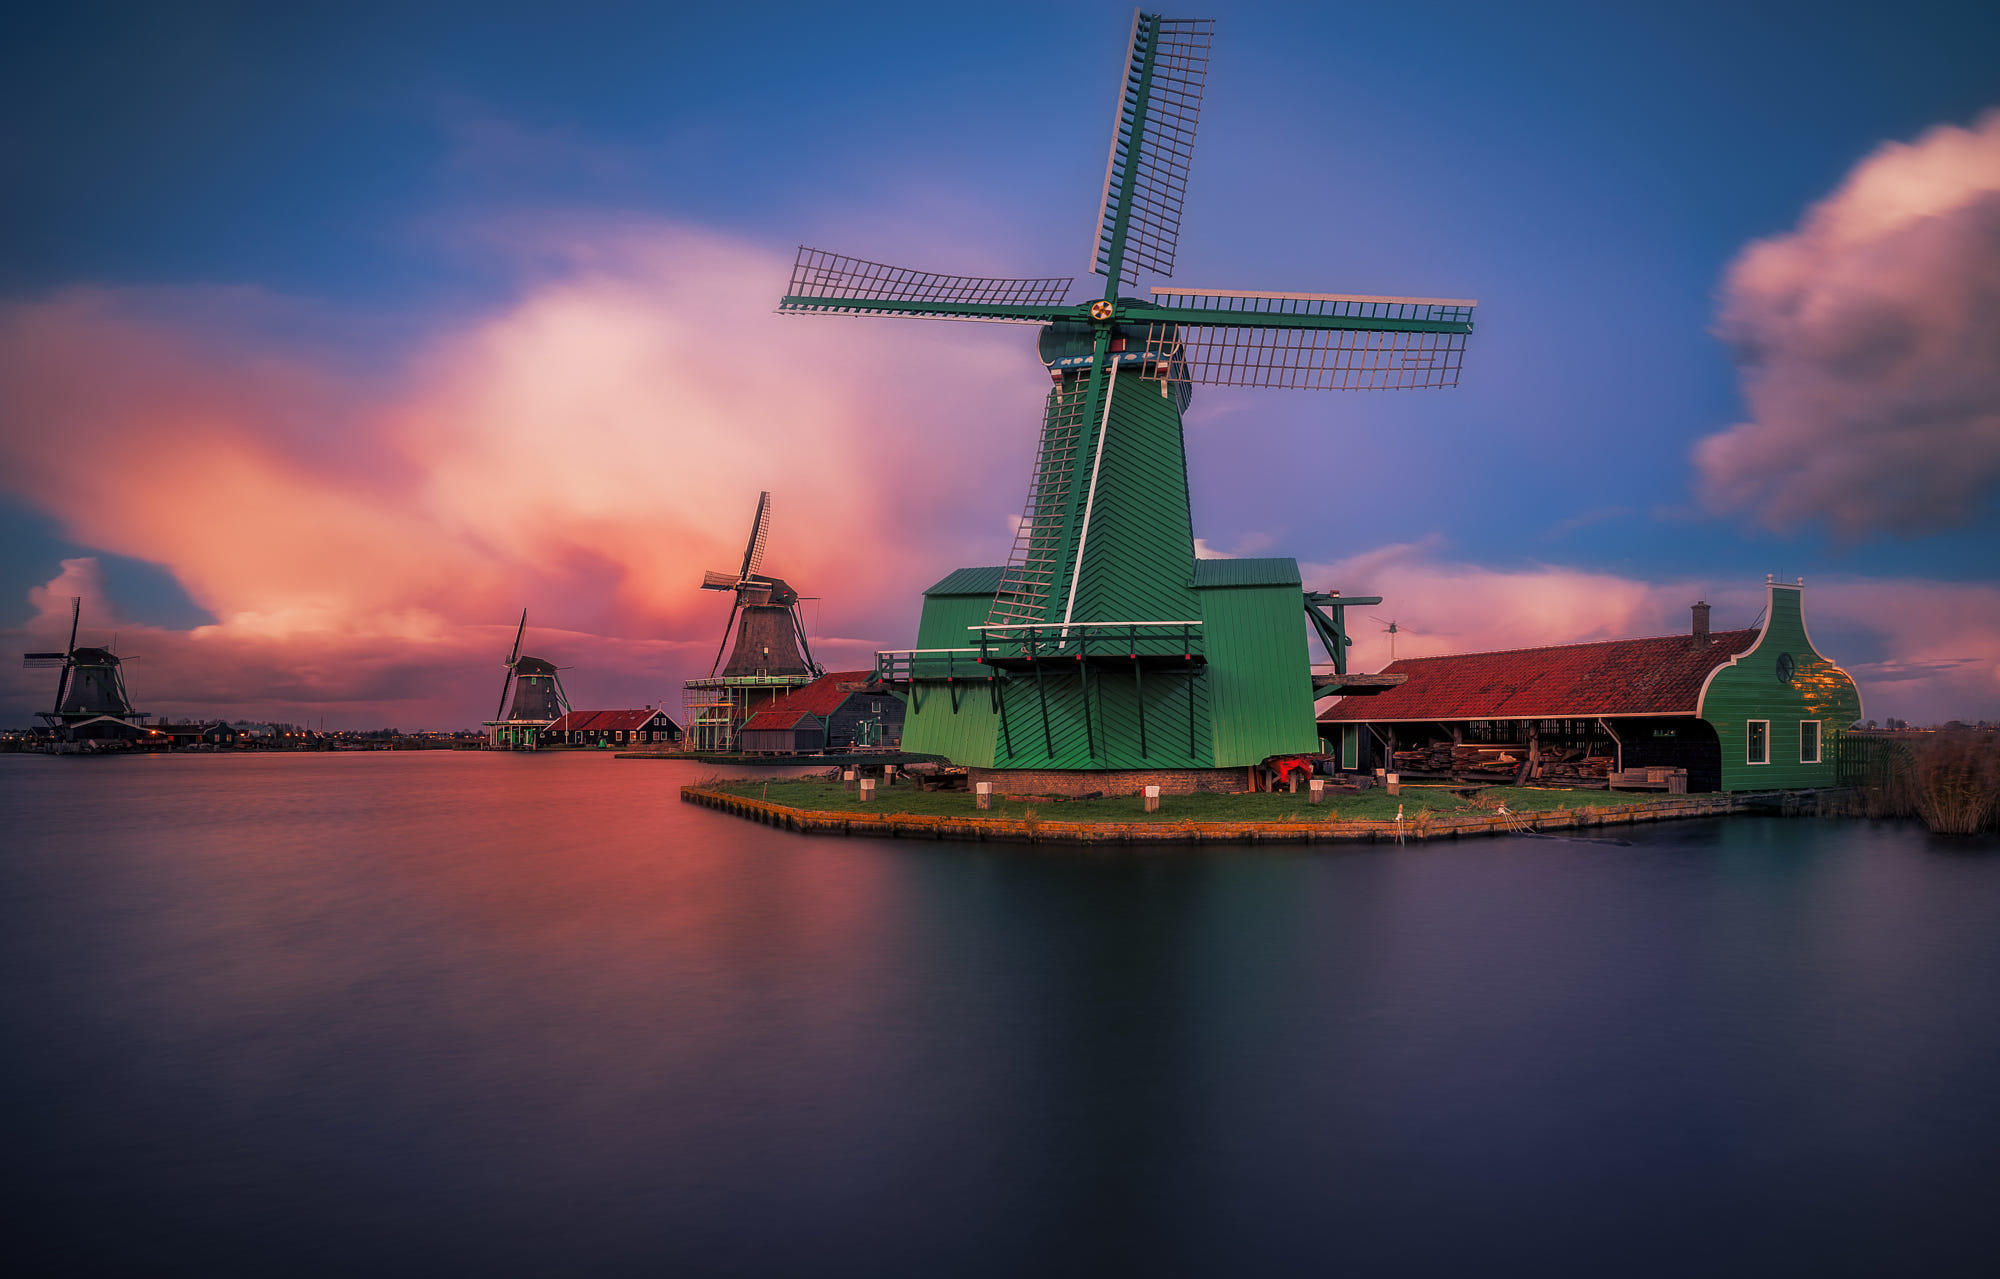 Visit us Windmills :-)